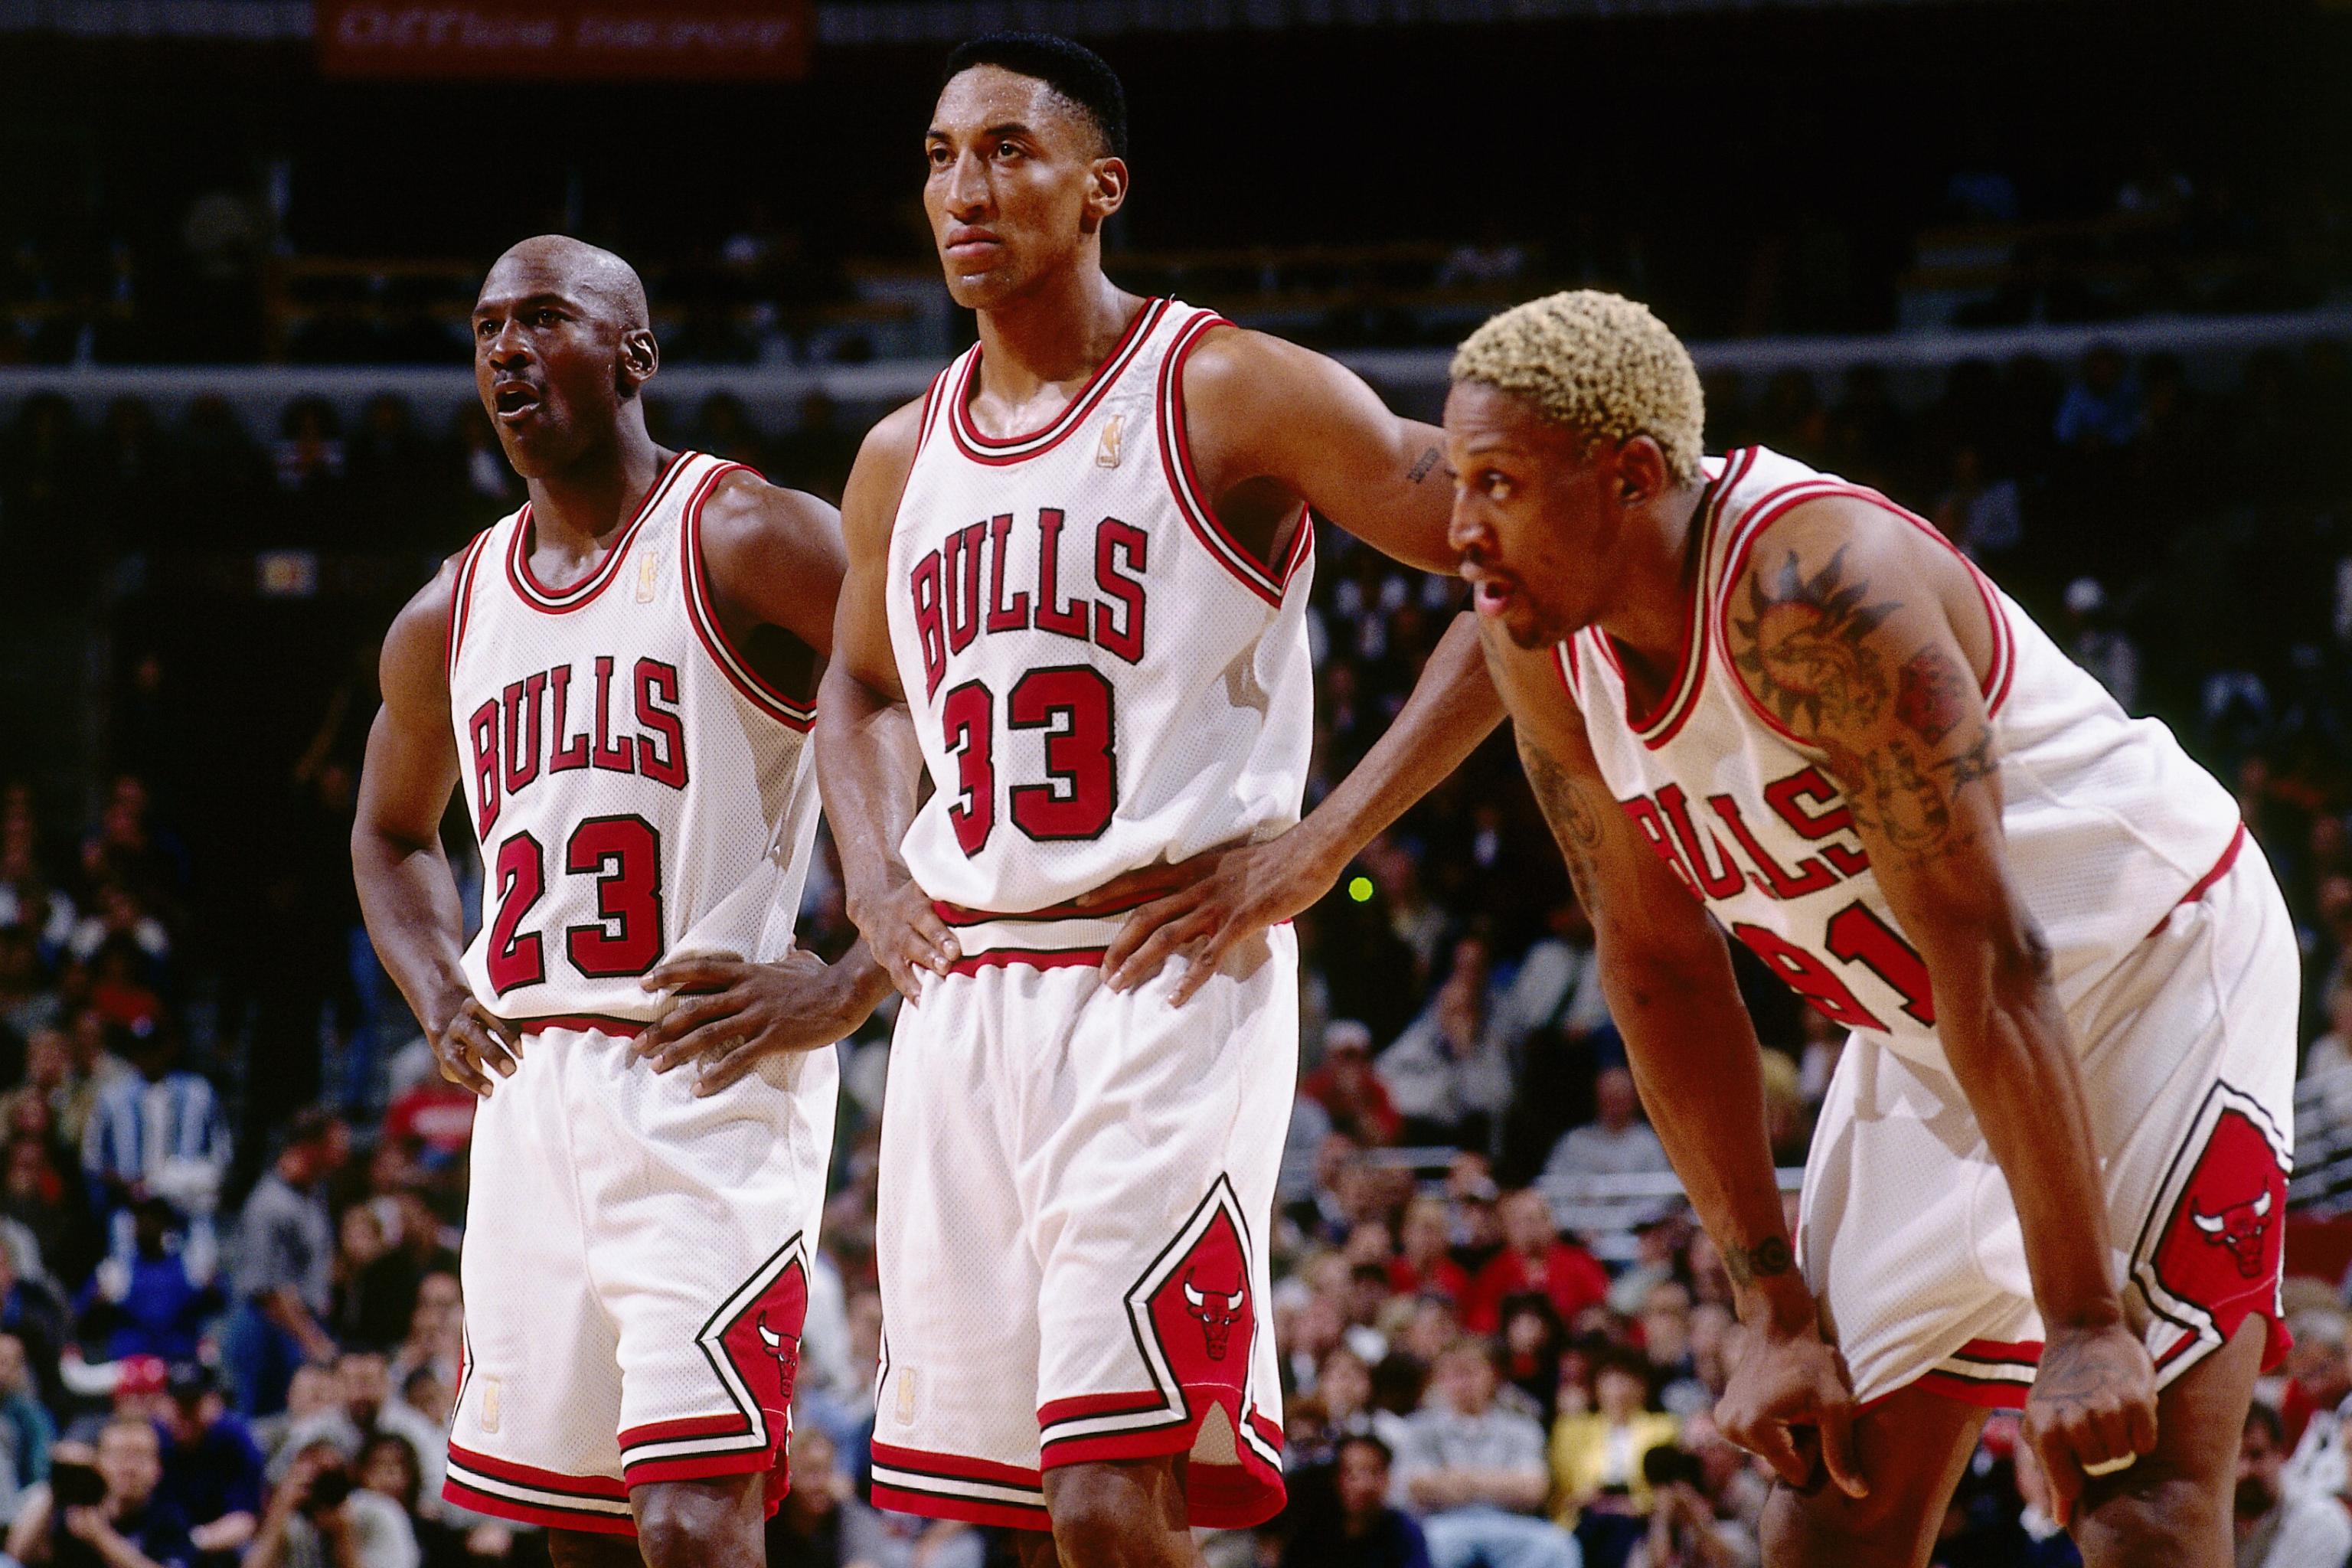 Vintage 90s NWT Champion Michael Jordan #23 Red Chicago Bulls Jersey - –  The Generation X of America